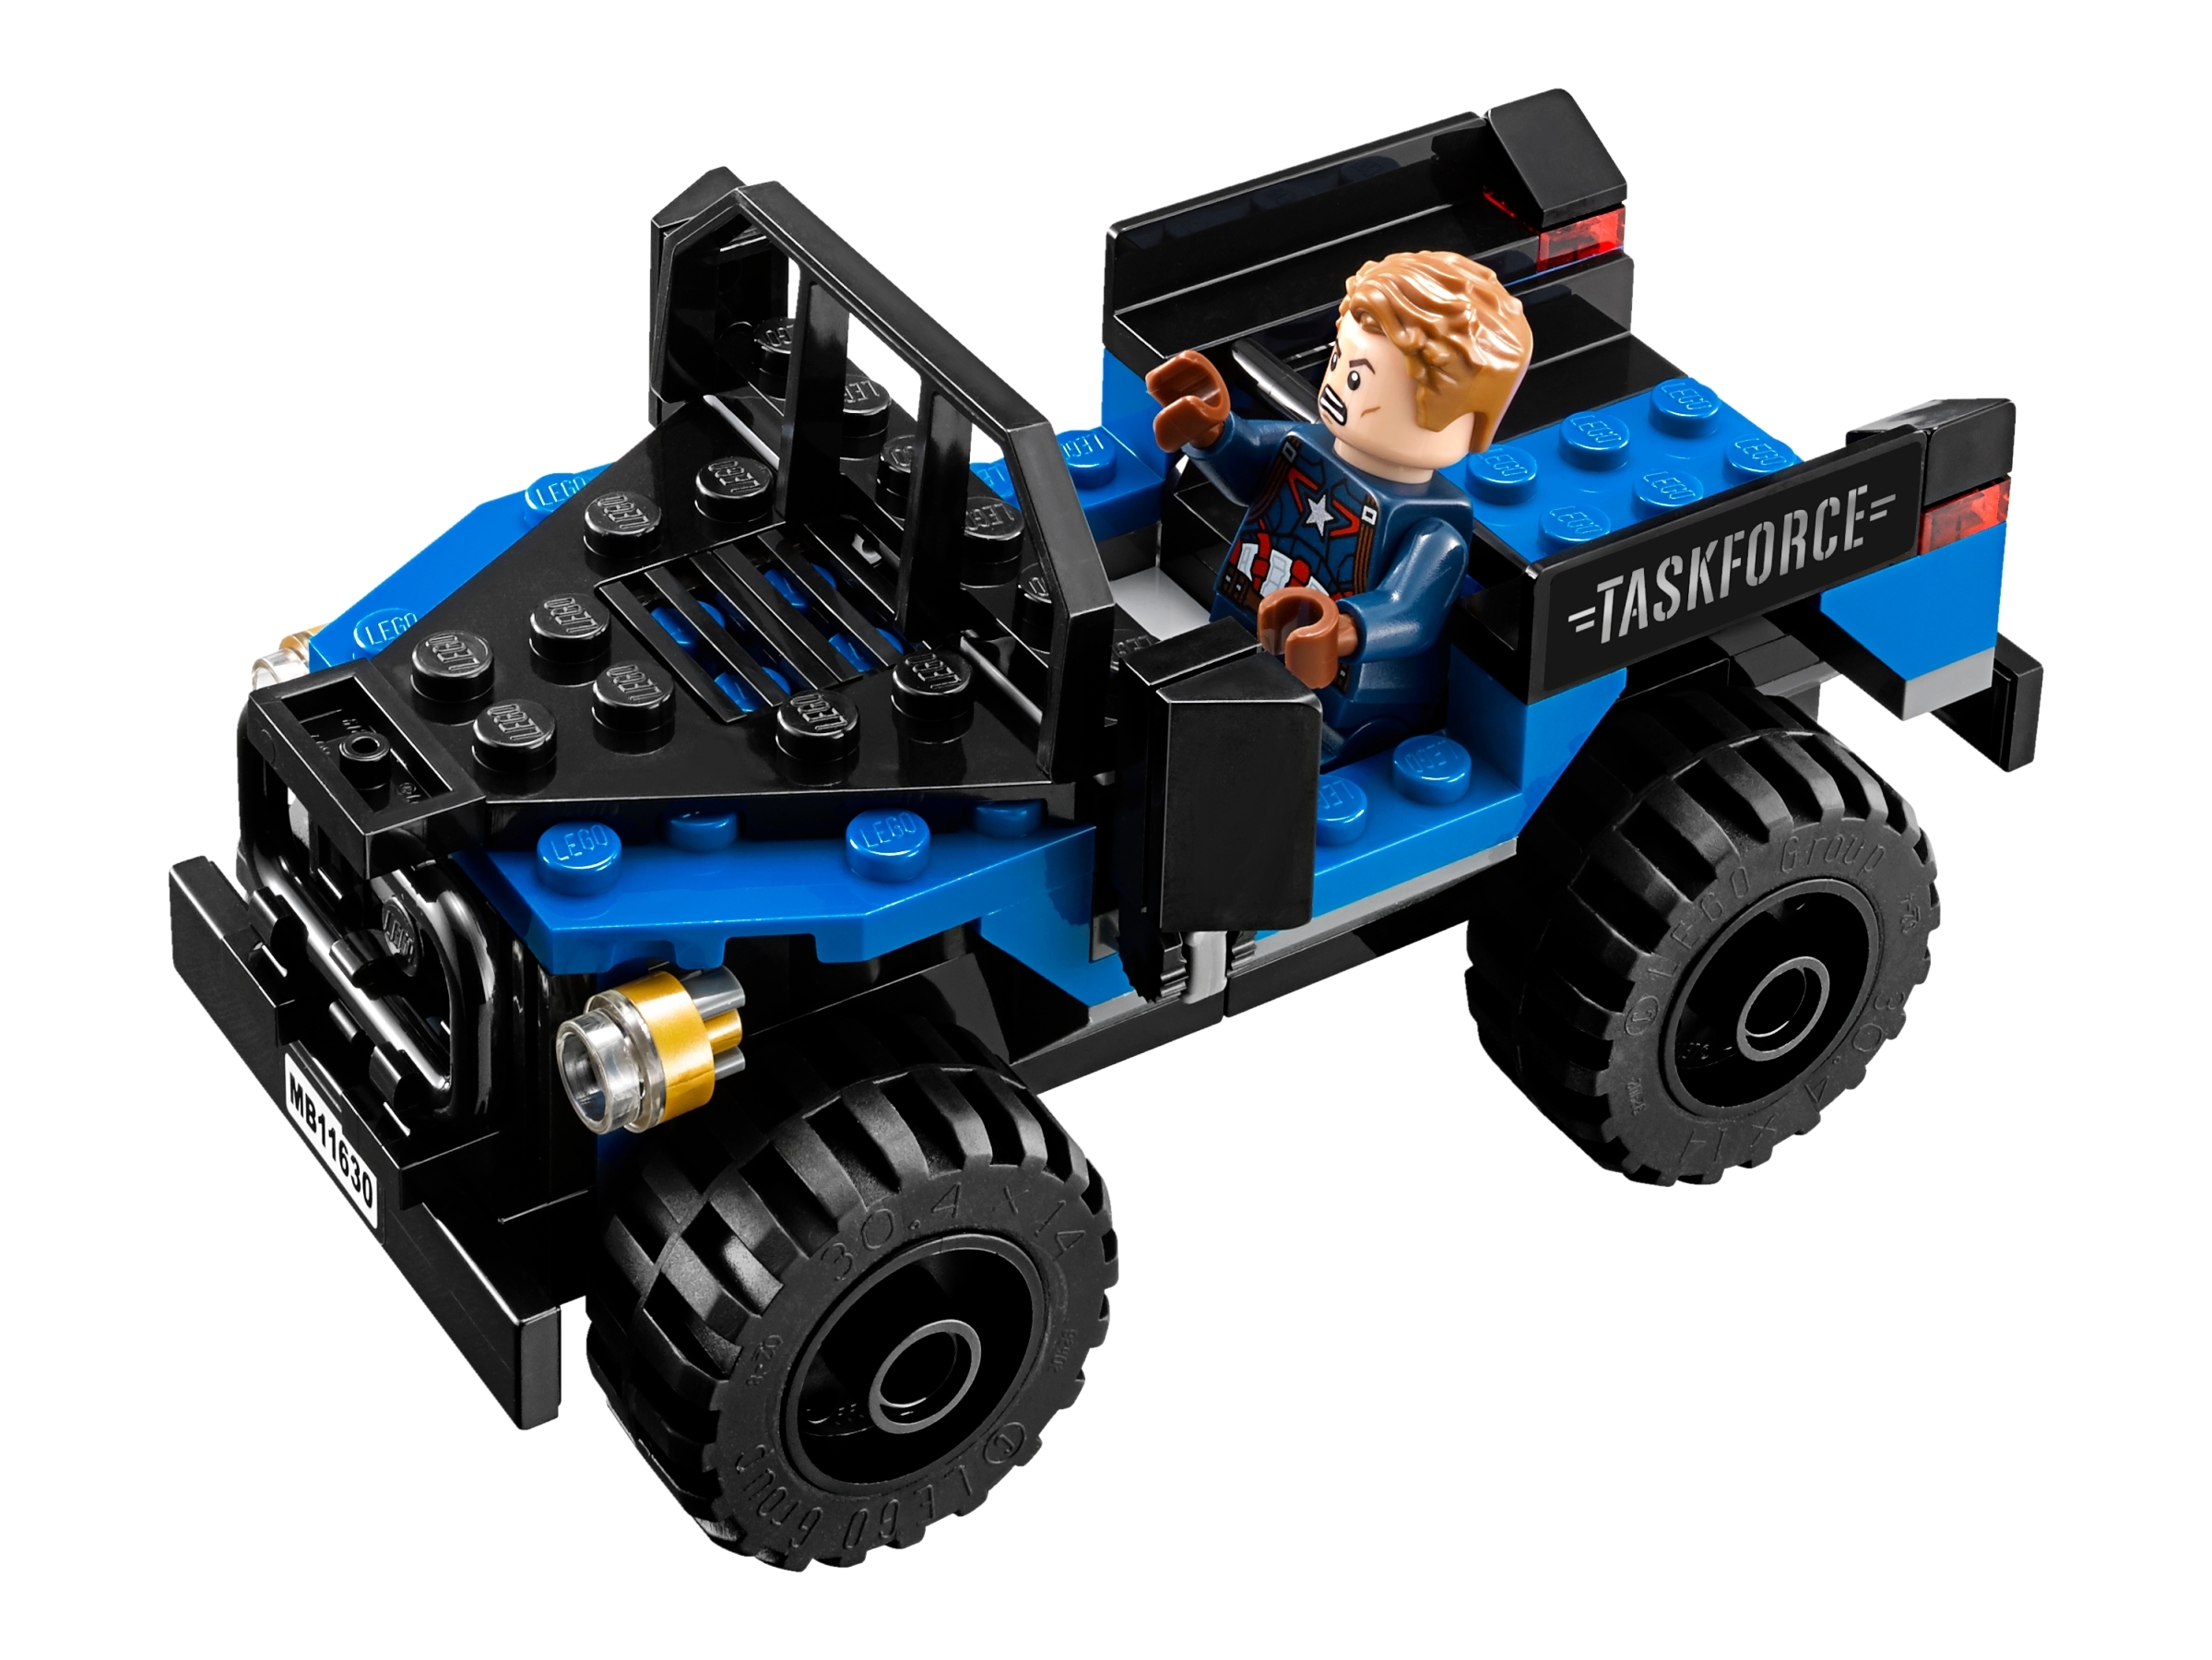 LEGO Marvel Super Heroes Black Panther Pursuit 76047 Toy